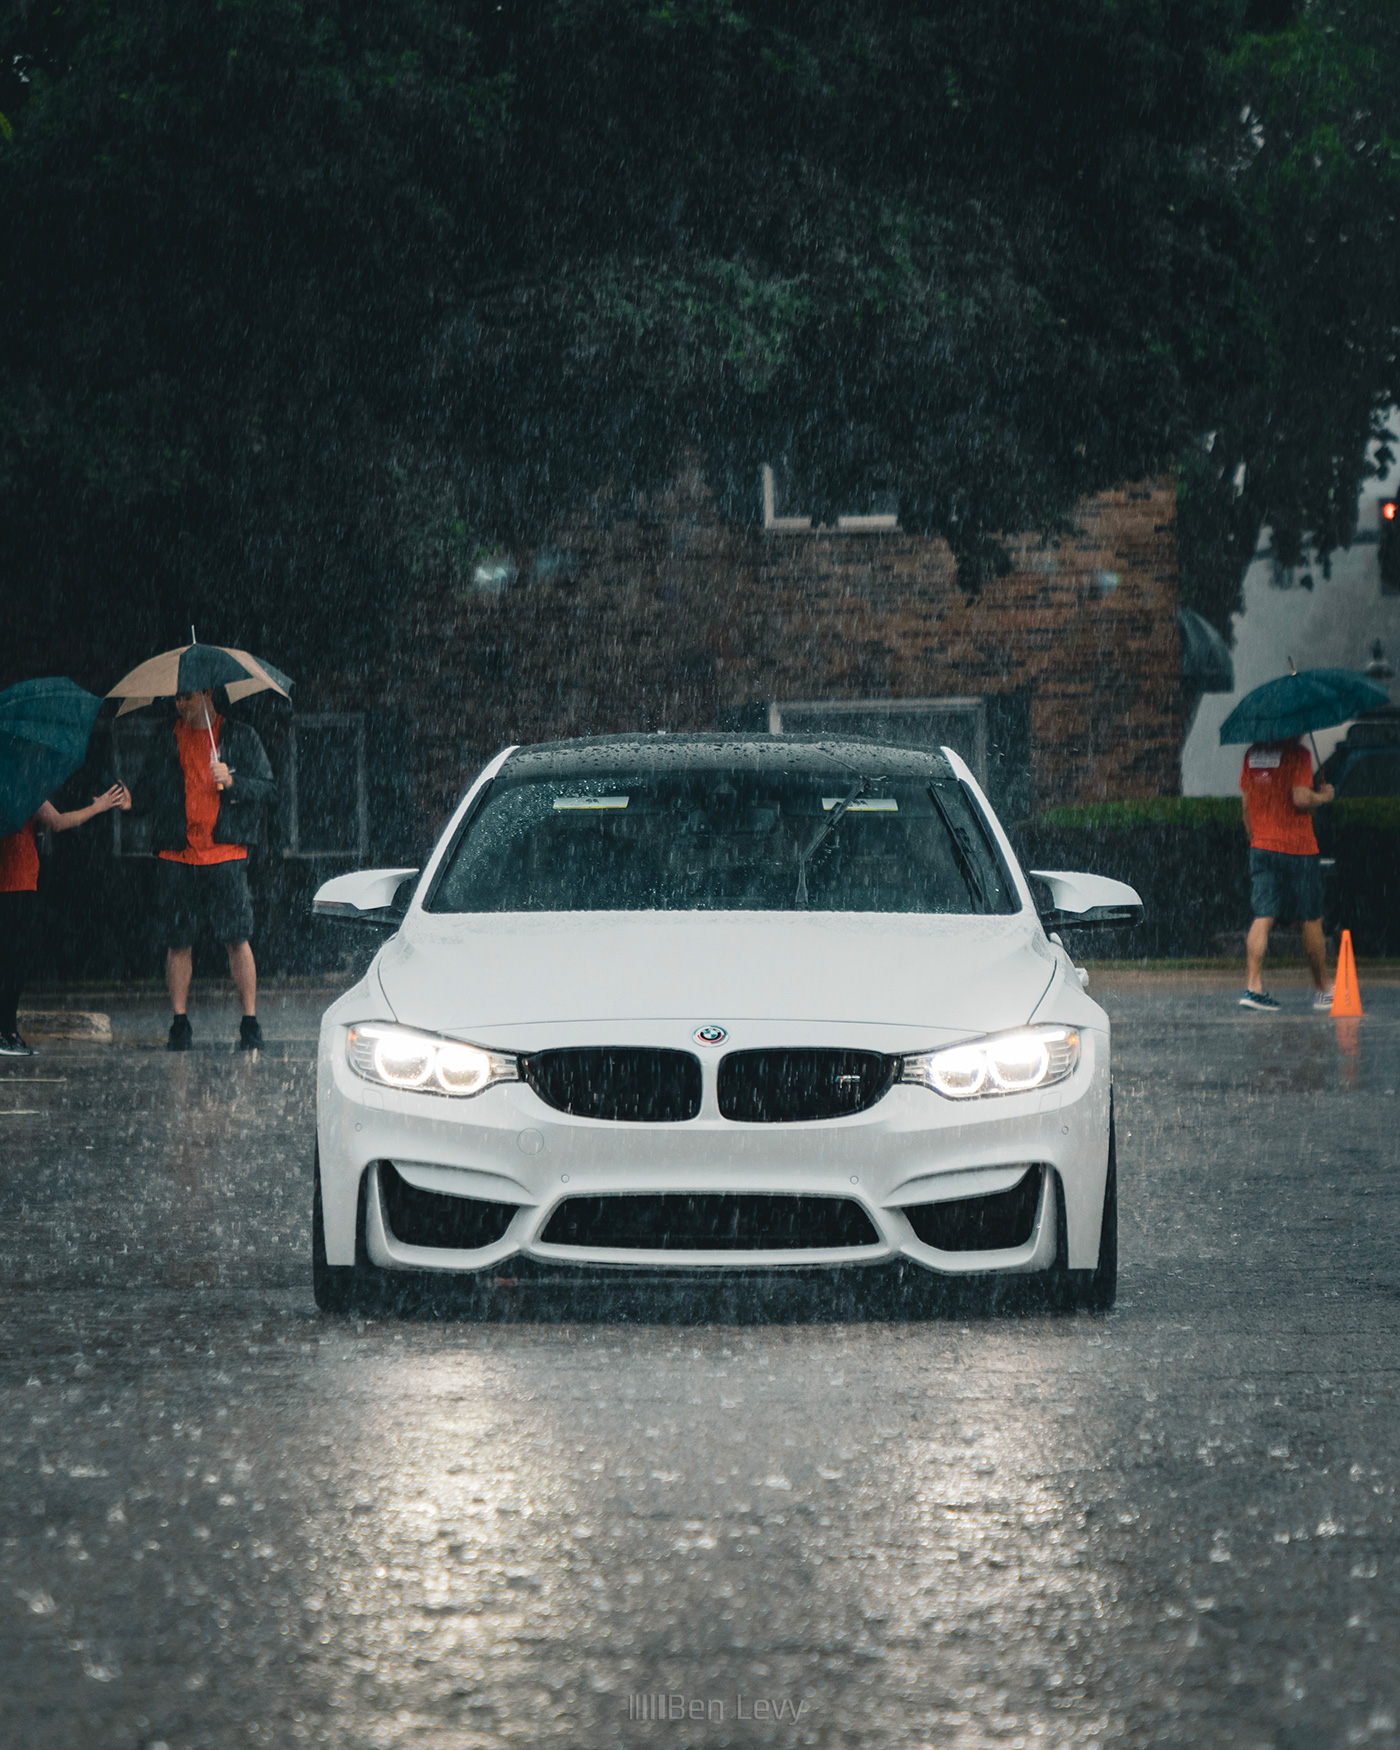 Mineral White Metallic F80 BMW M3 in Pouring Rain